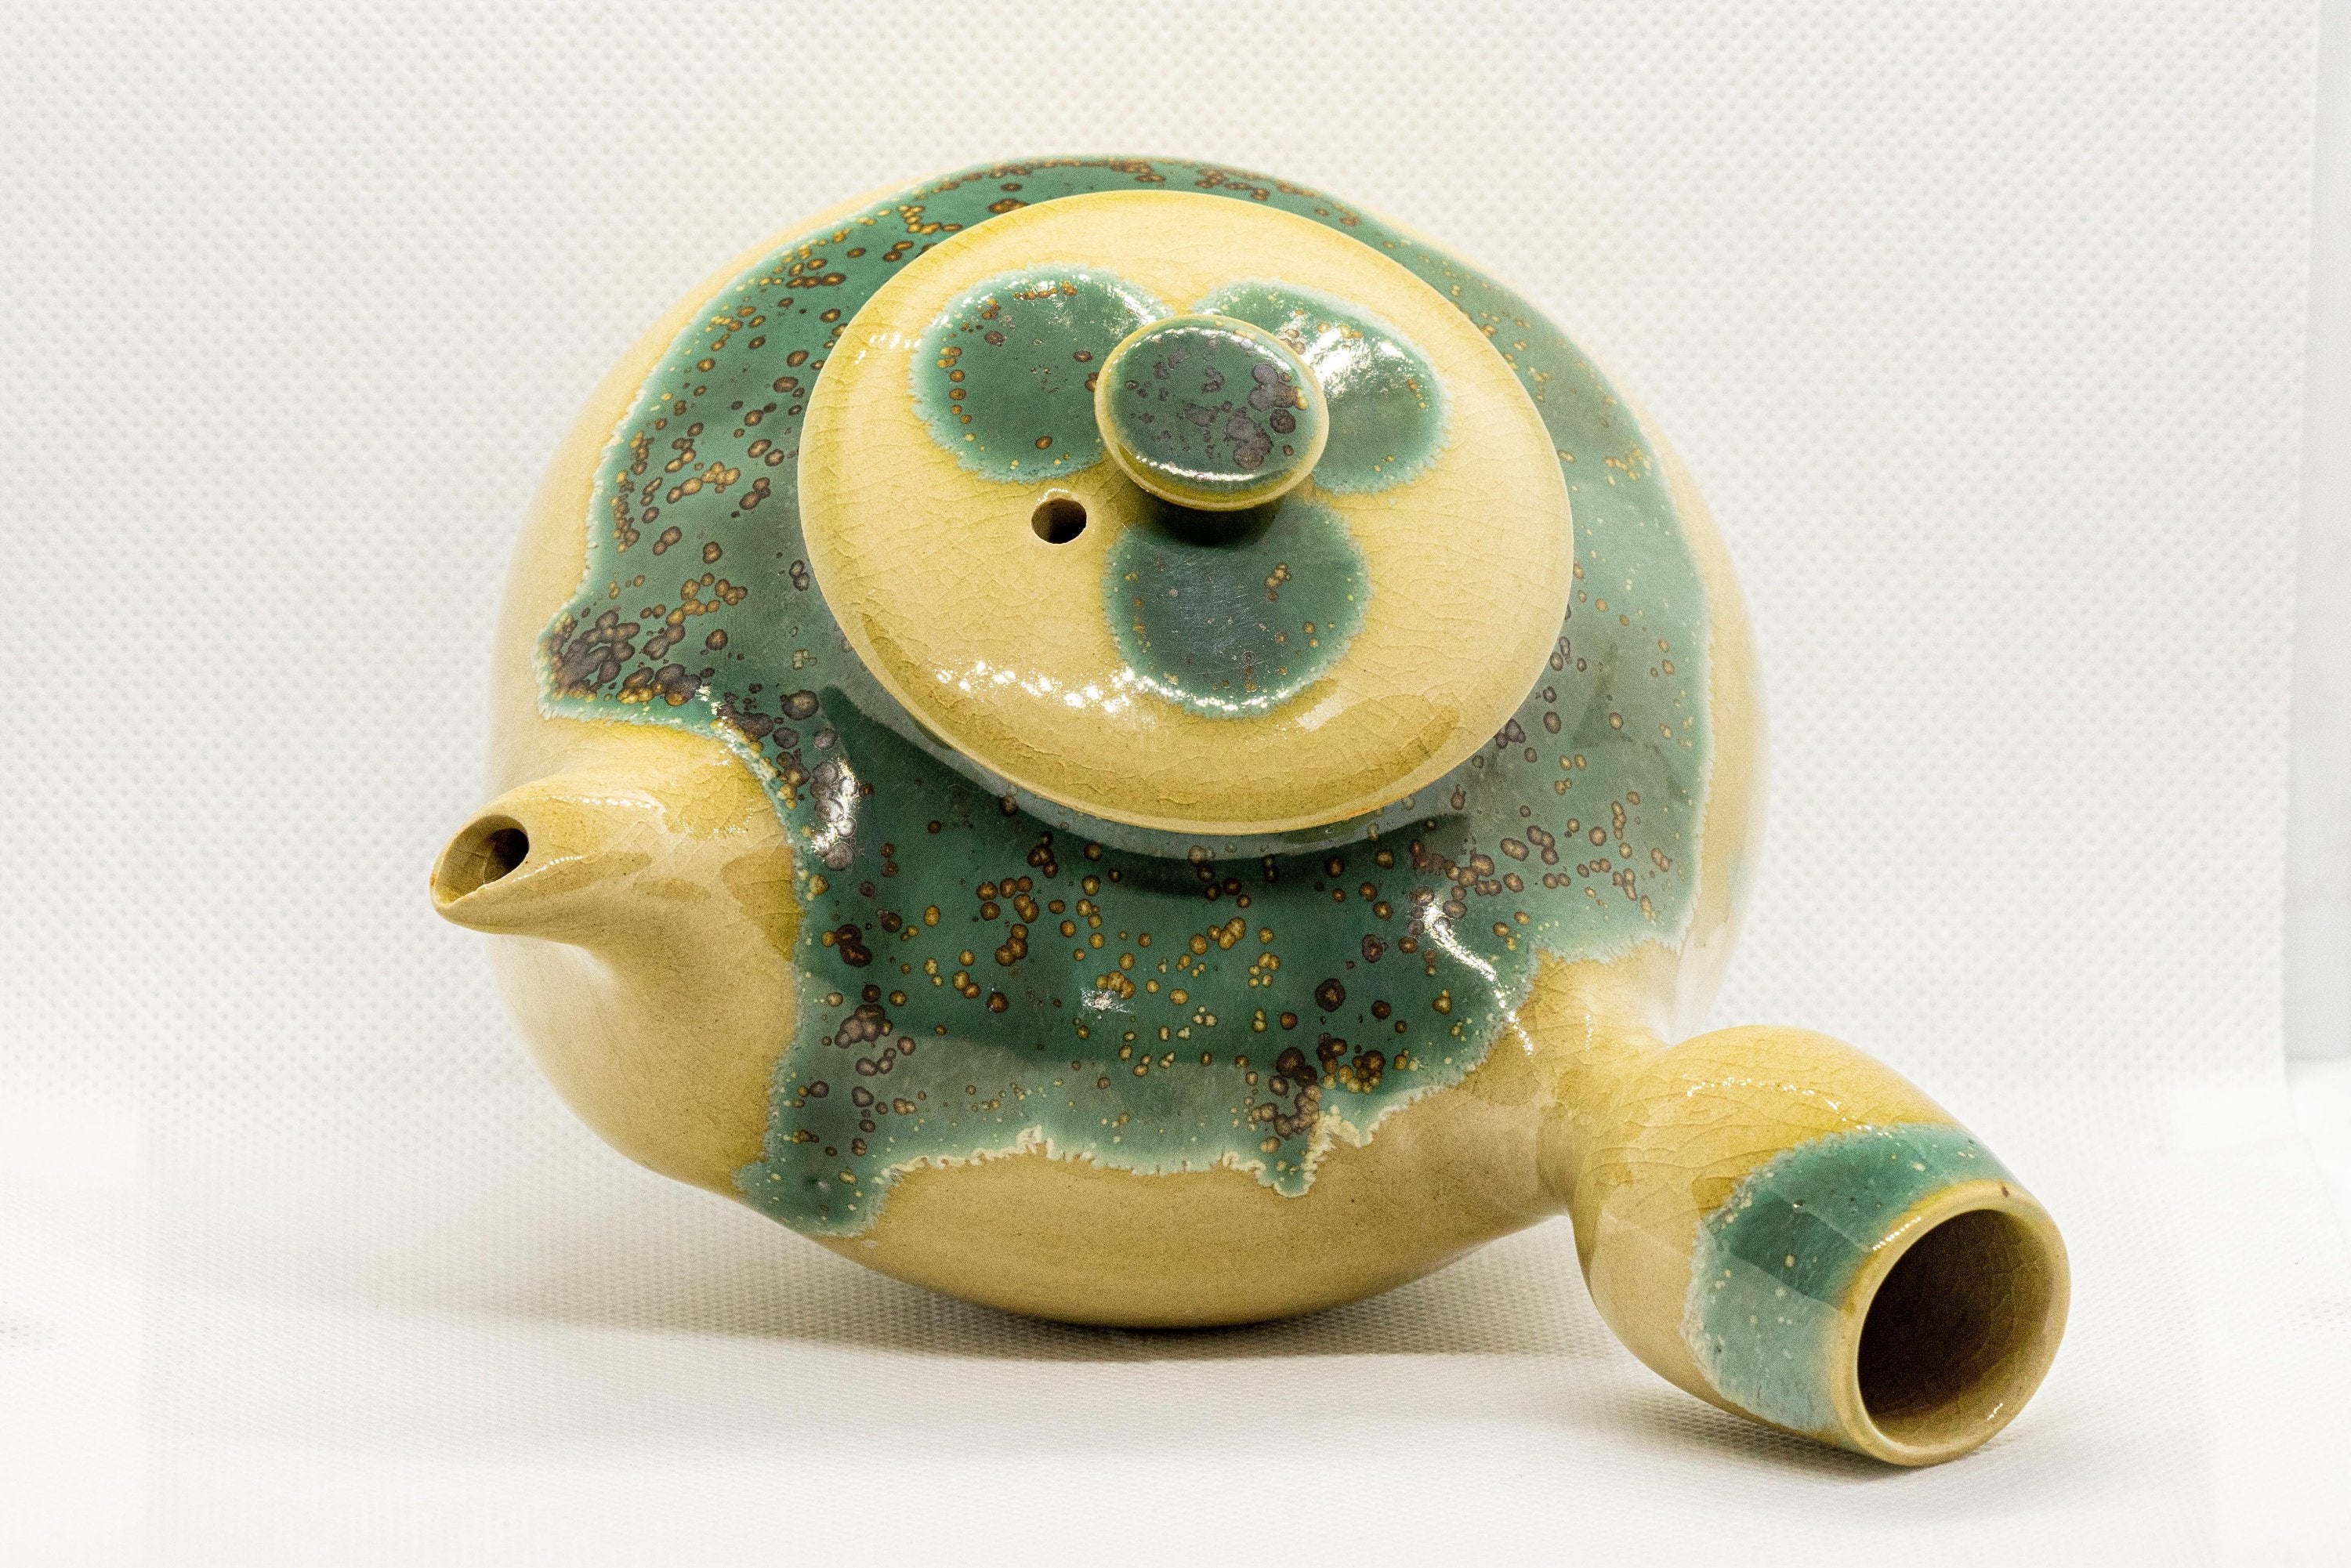 Japanese Kyusu - Agano-yaki teapot - gold-flecked blue-green enamel - 380ml - Tezumi